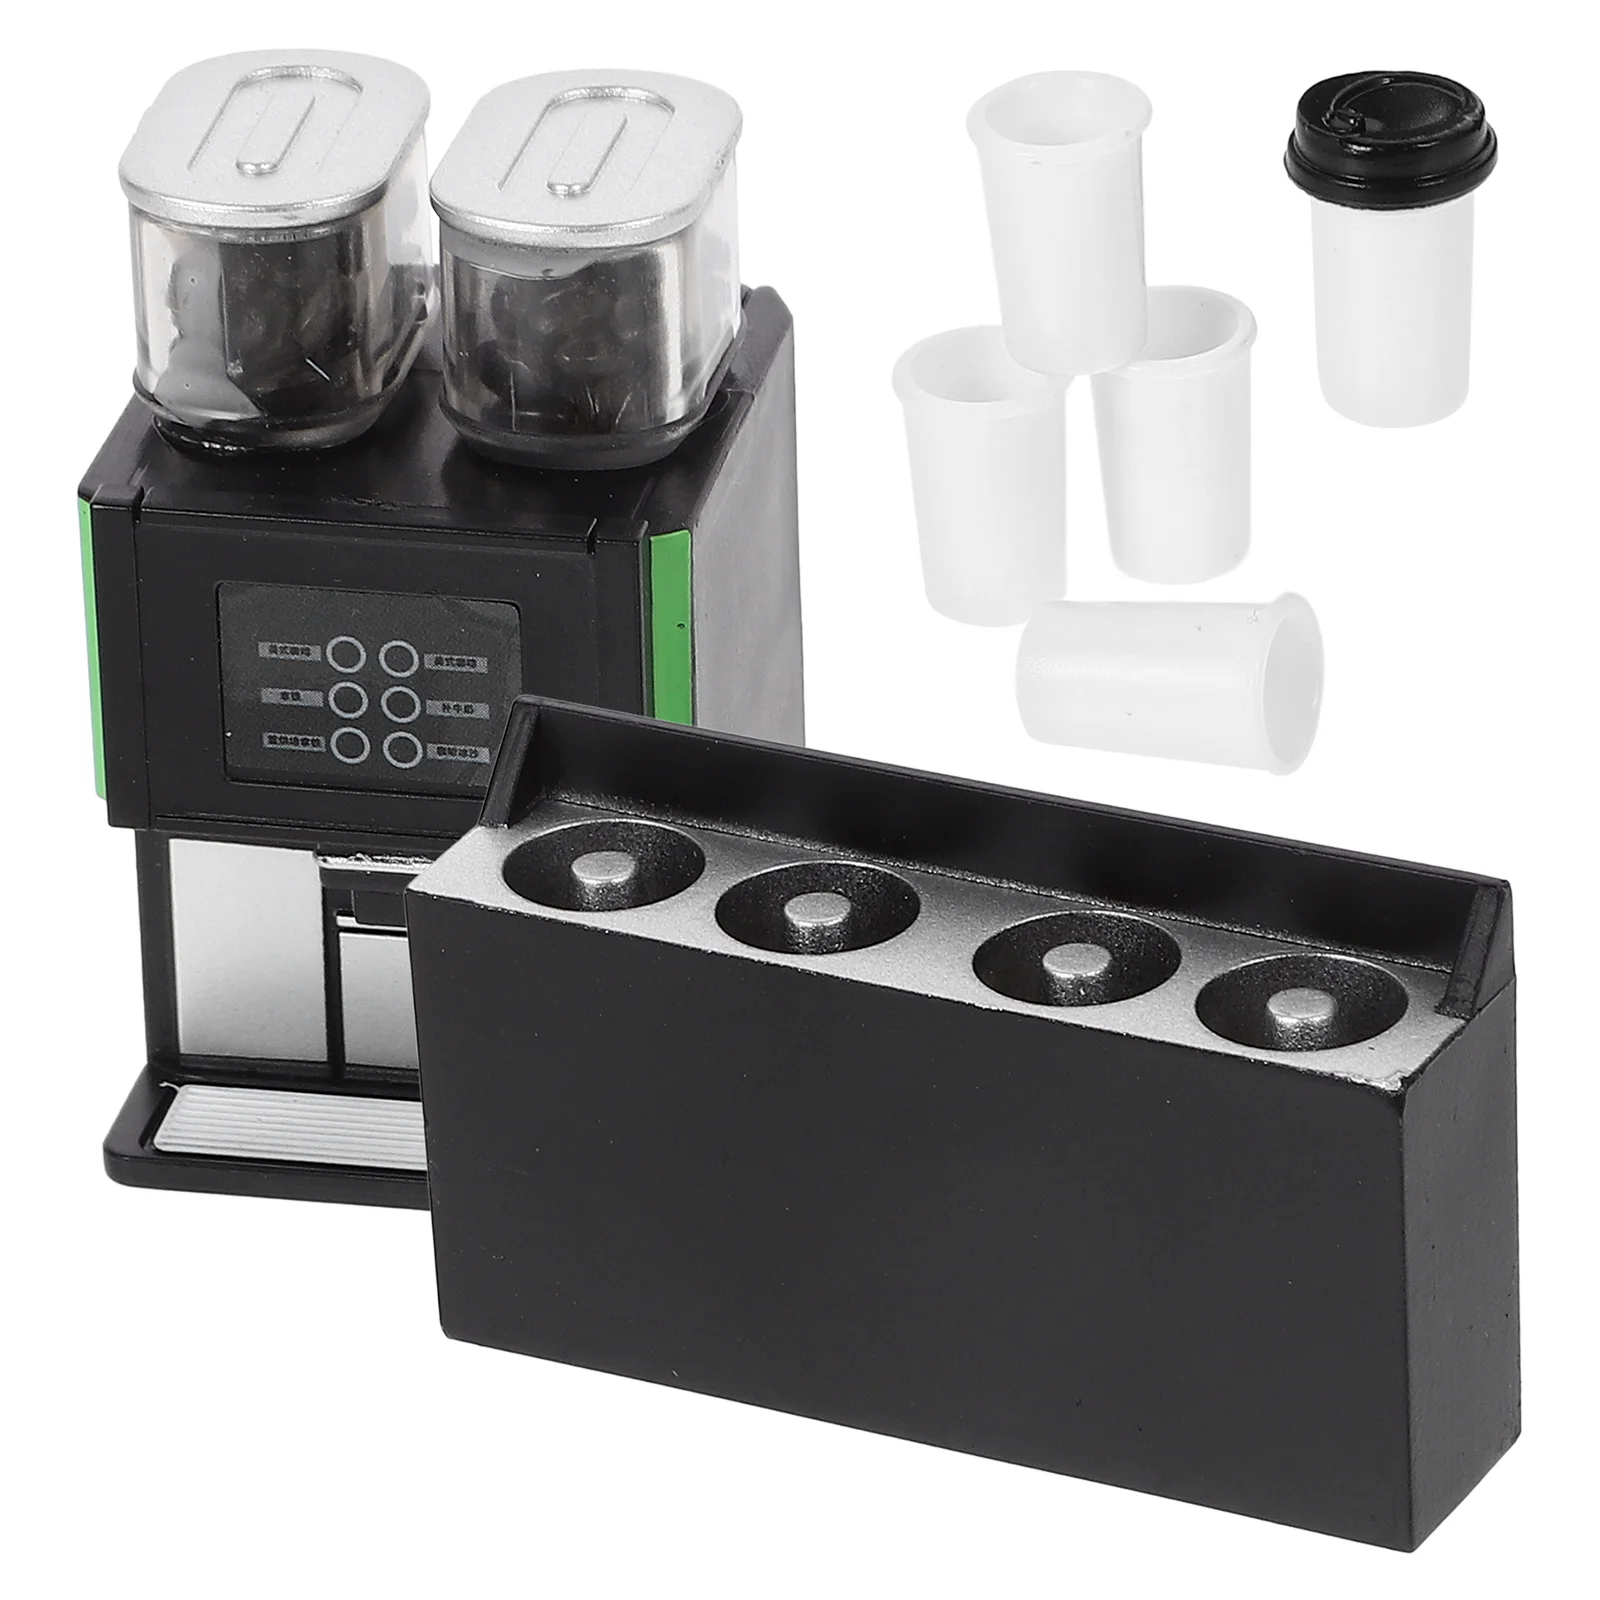 

Miniature Coffee Maker Cups Set Plastic Dollhouse Espresso Machine Coffee Cups Toys Playset Kids Pretend Play Accessories